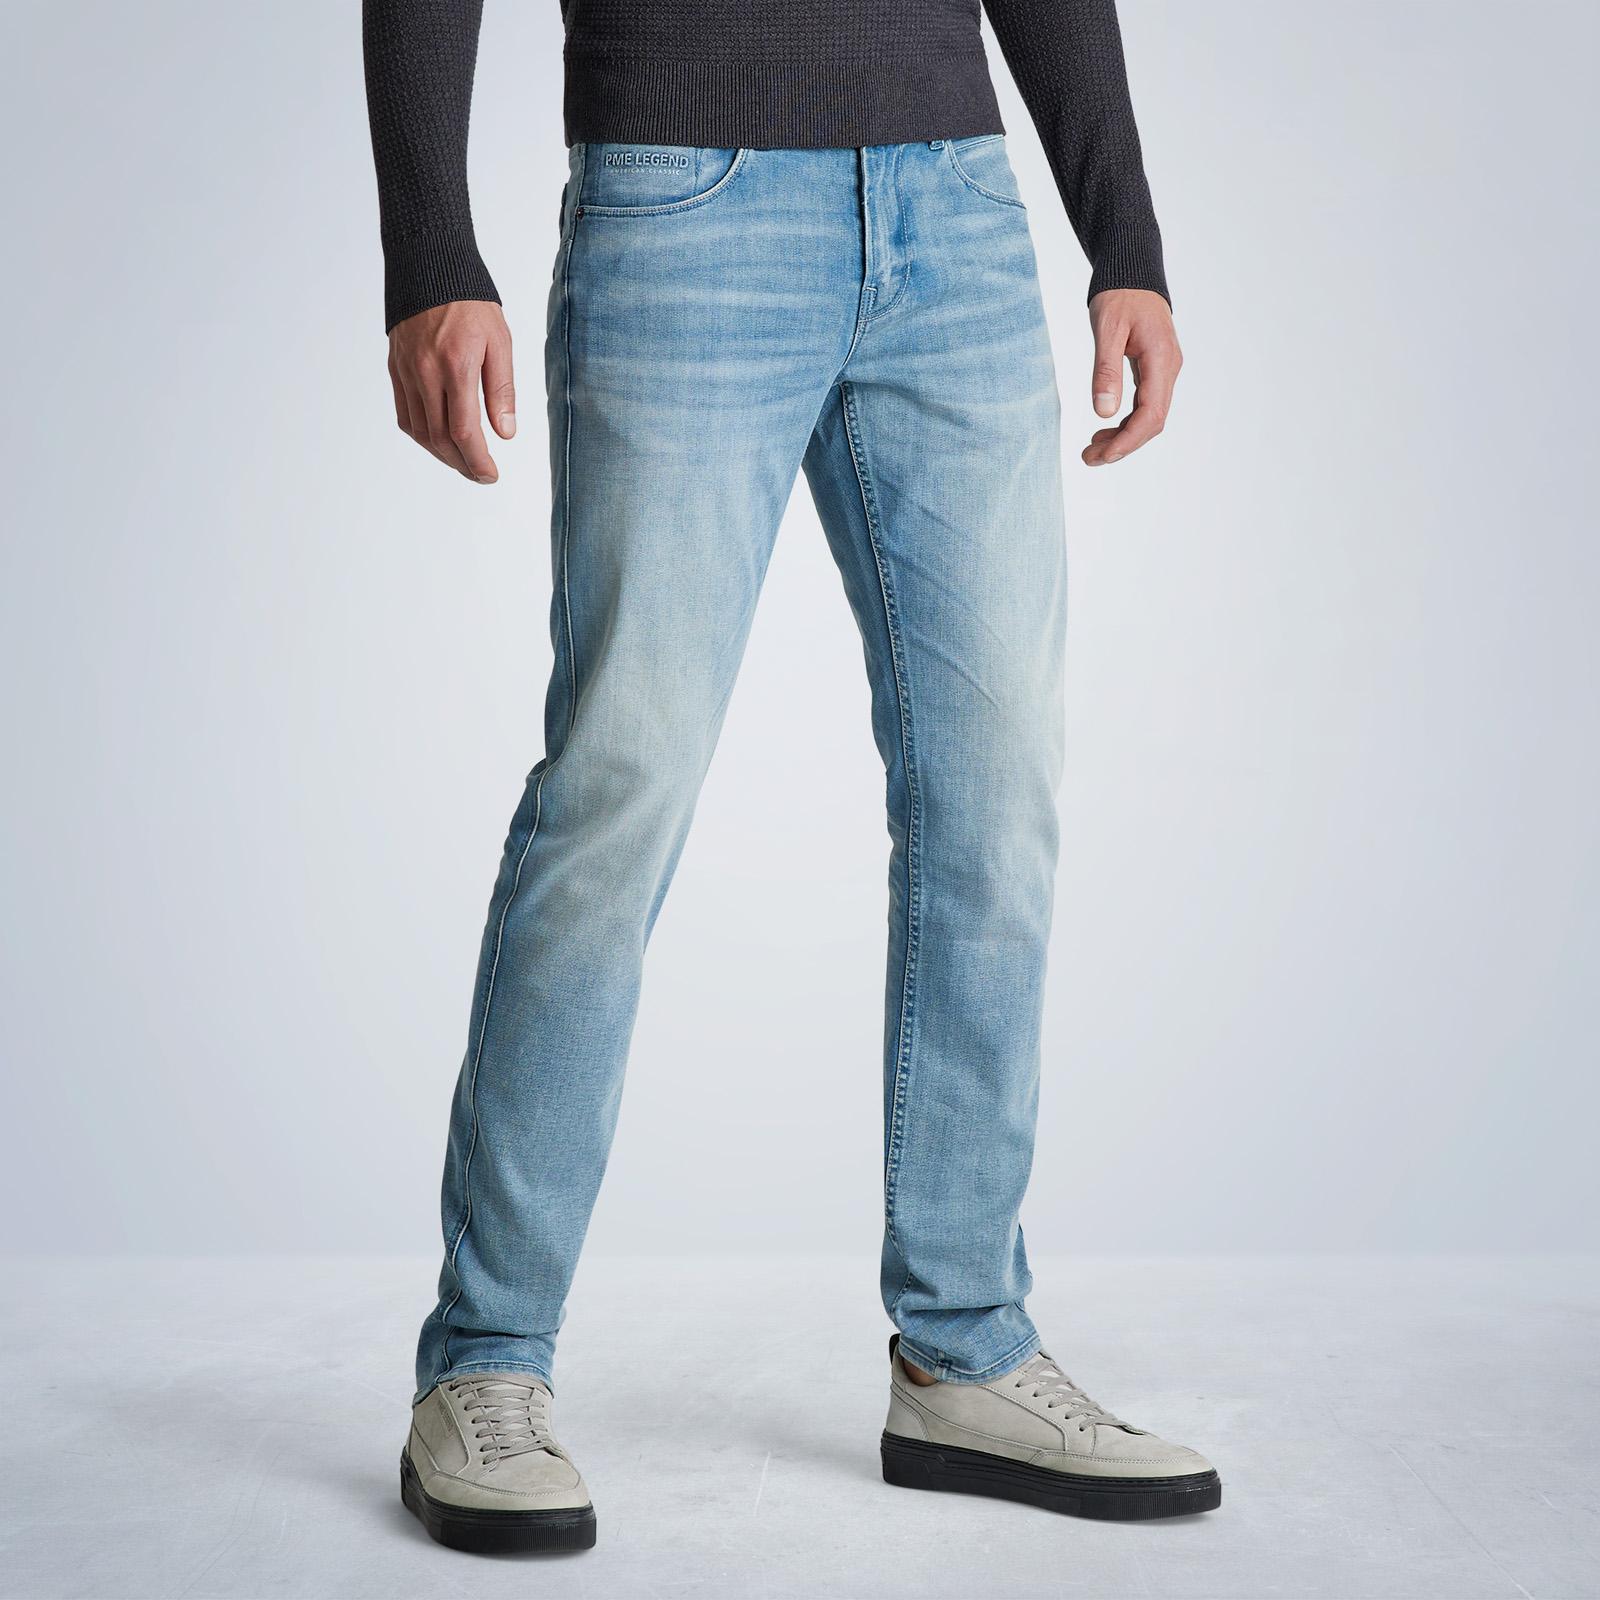 PME Legend Nightflight Jeans product